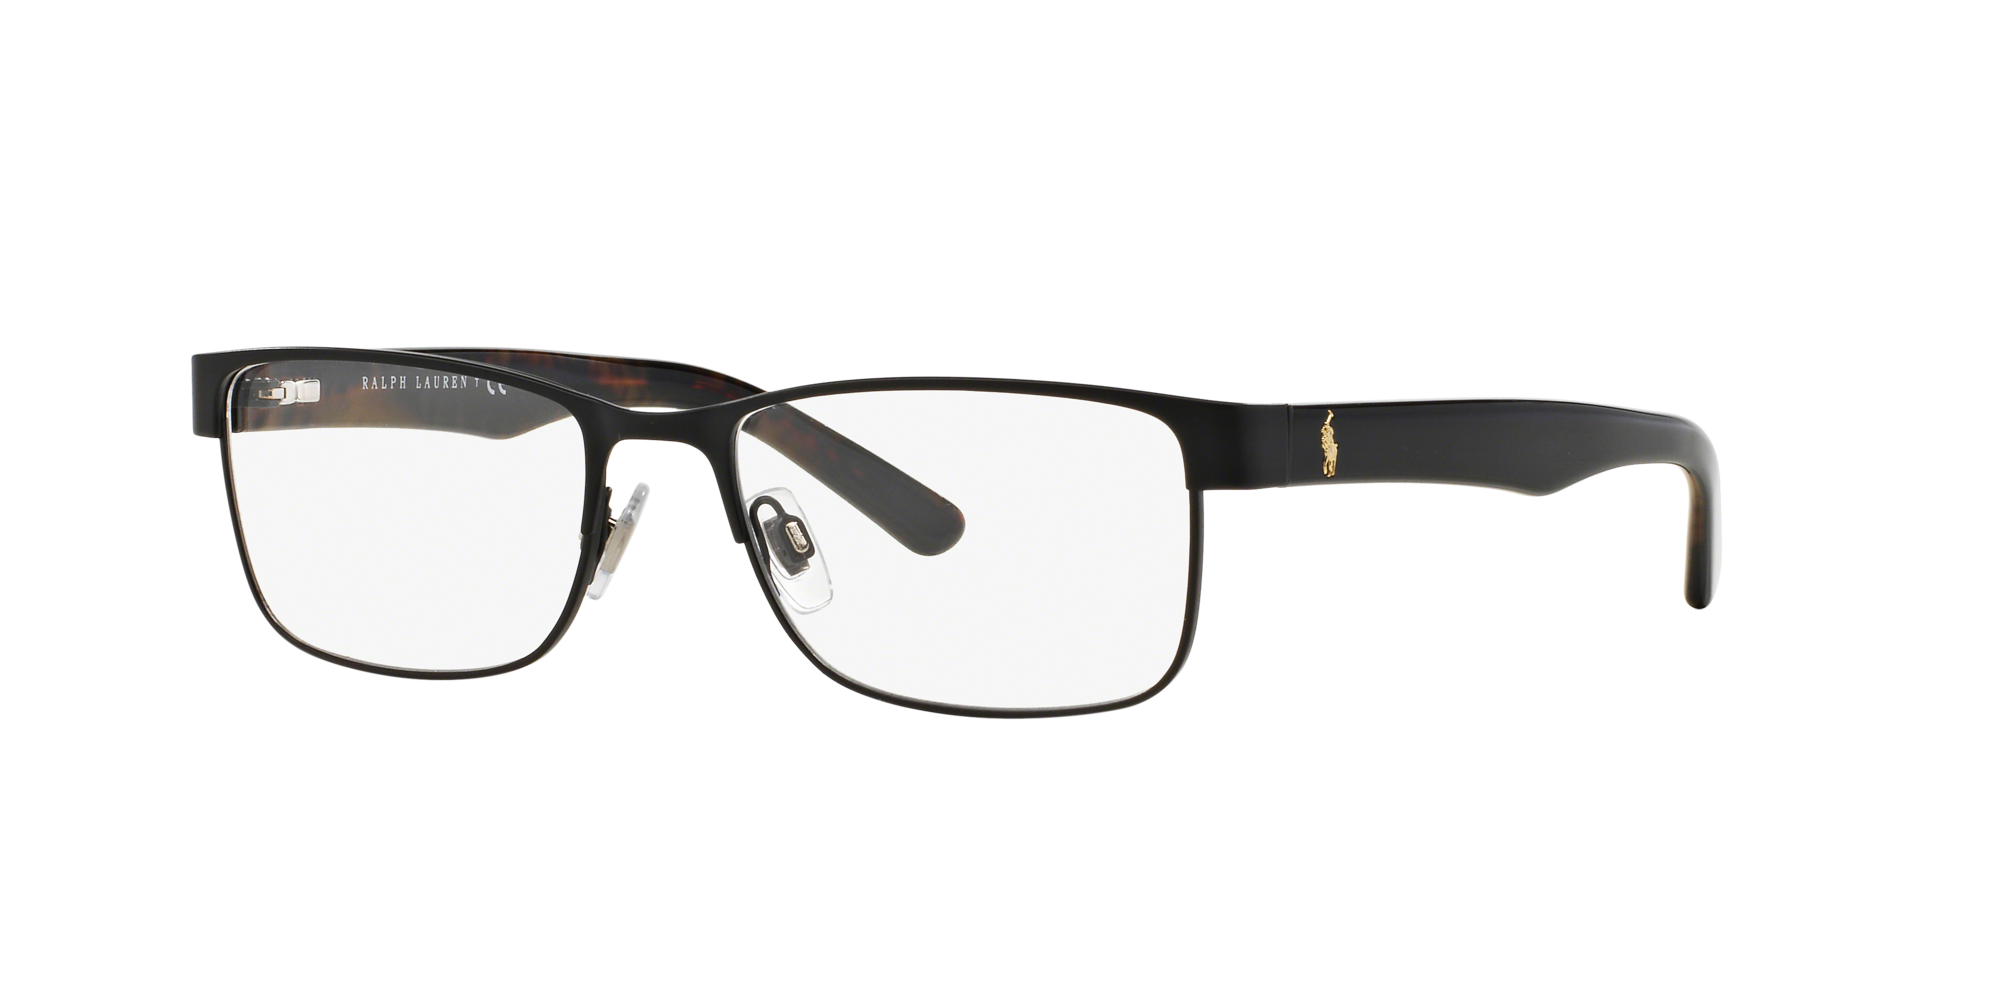 Angle_Left01 Polo Ralph Lauren PH 1157 Glasses Transparent / Black